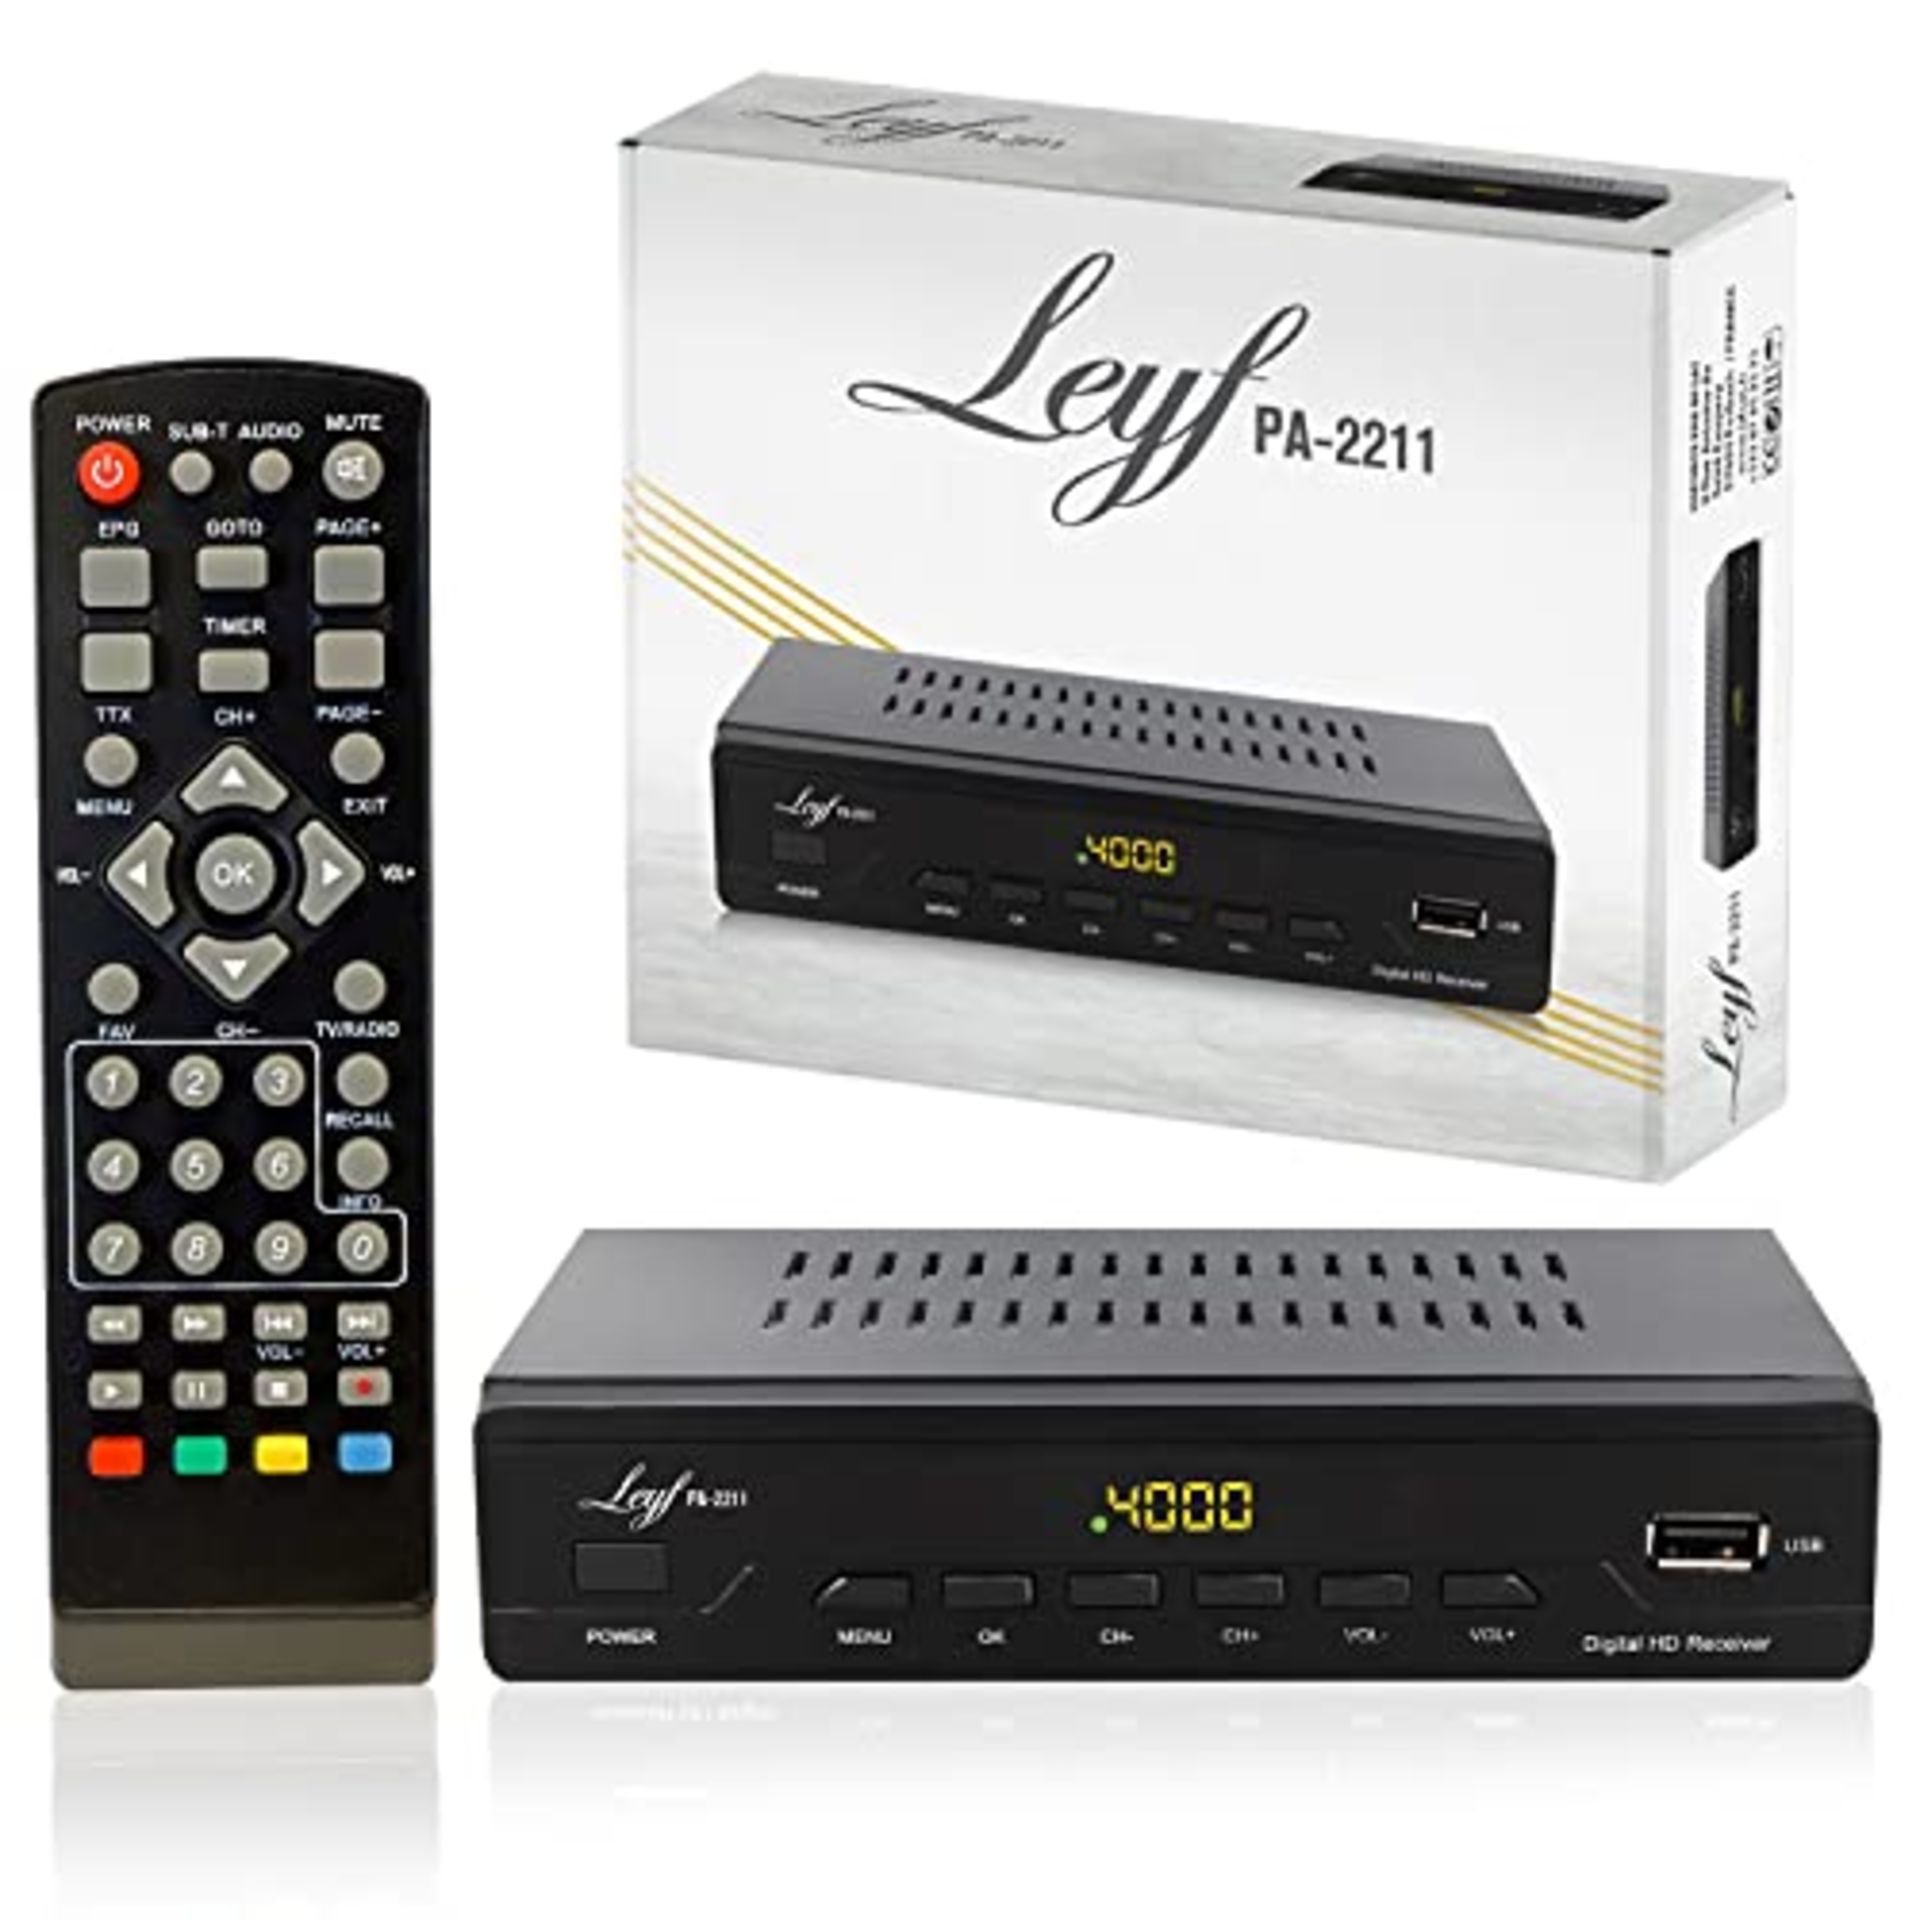 LEYF PA-2211 TNT Decoder - Full HD 1080p - DVB-T2 - TNT Tuner - TV Decoder (HDTV, SCAR